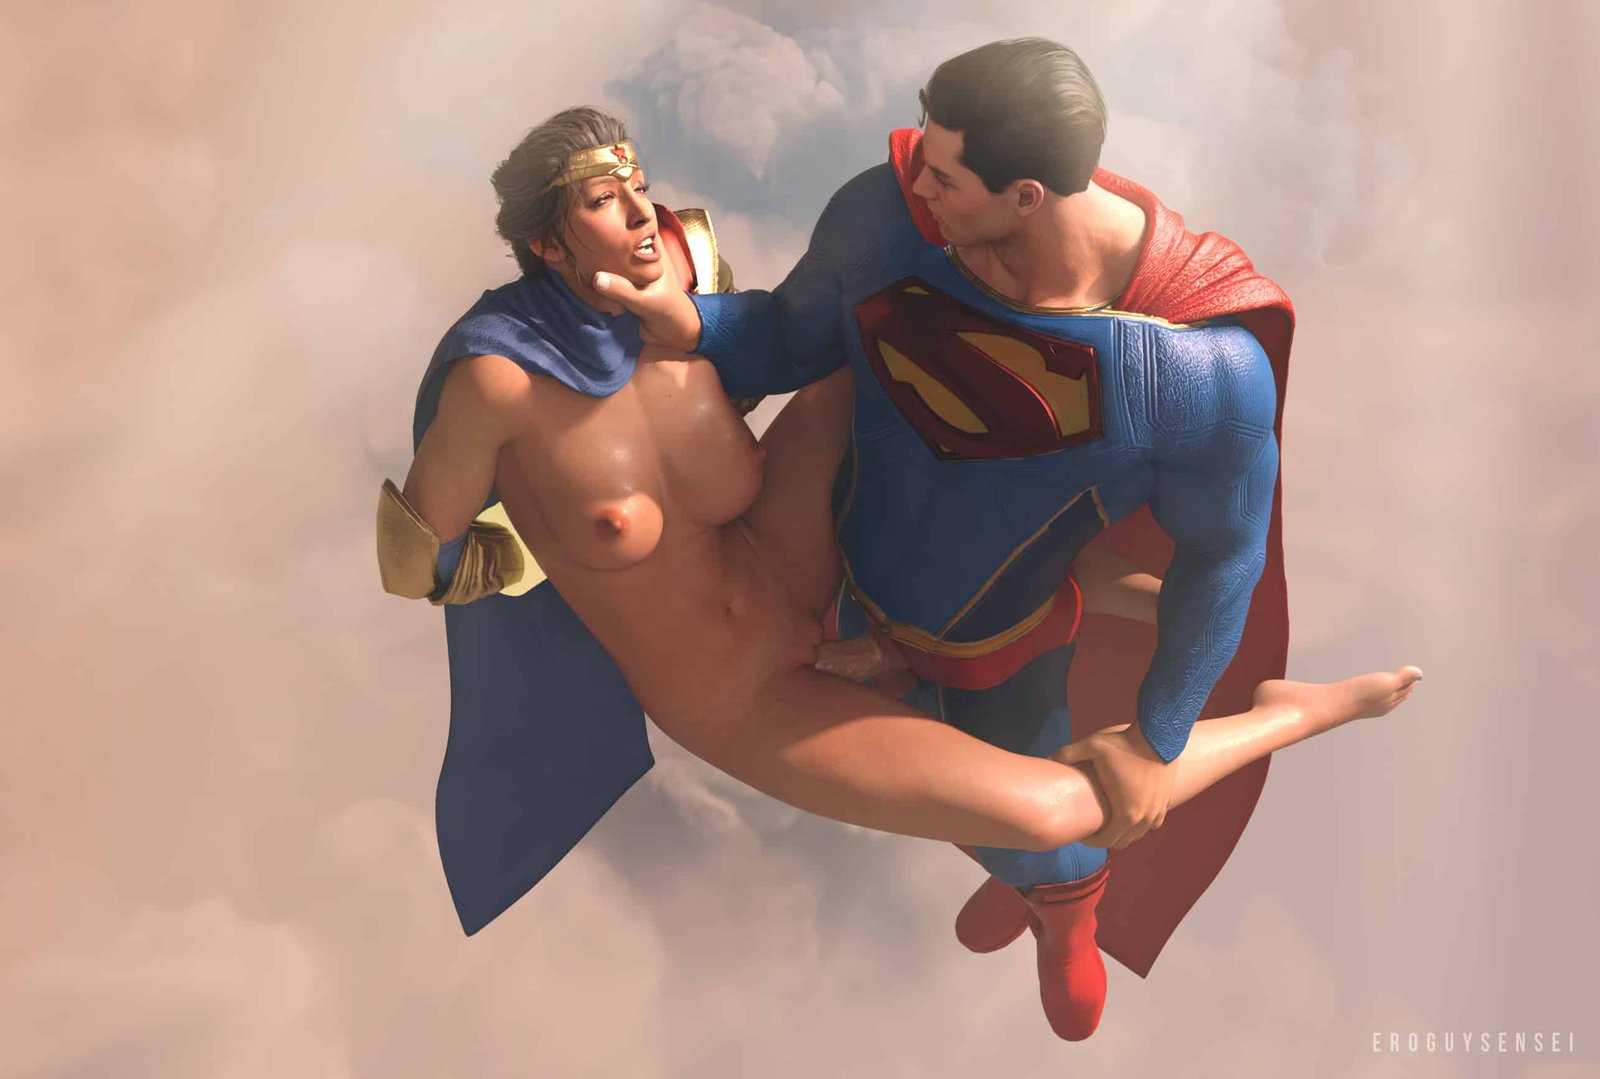 Superman having sex with Wonder Woman in the skies